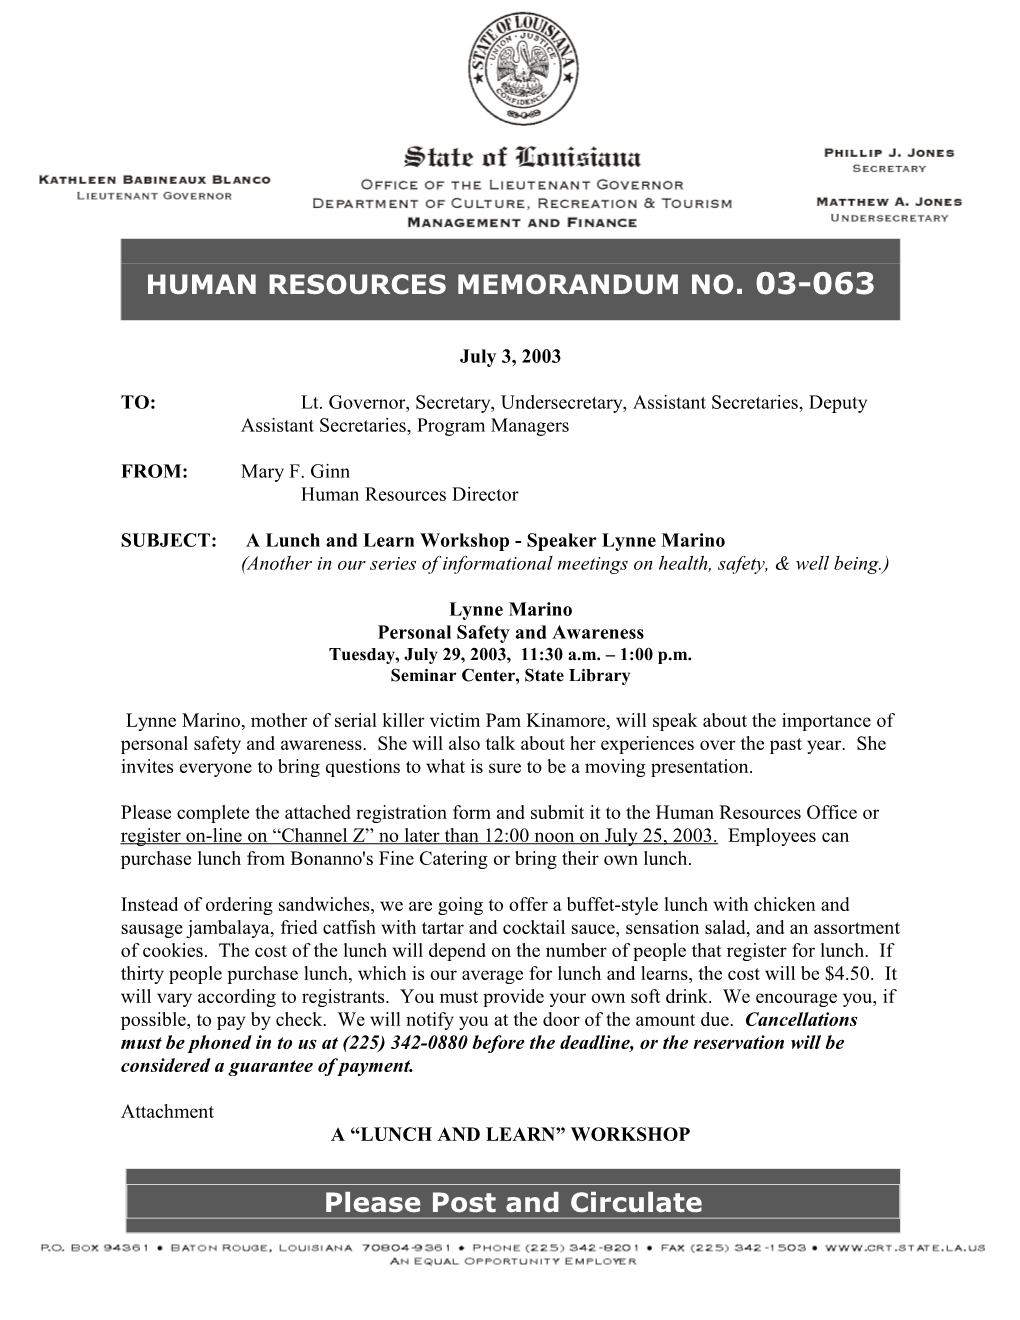 Human Resources Memorandum No. 03-063